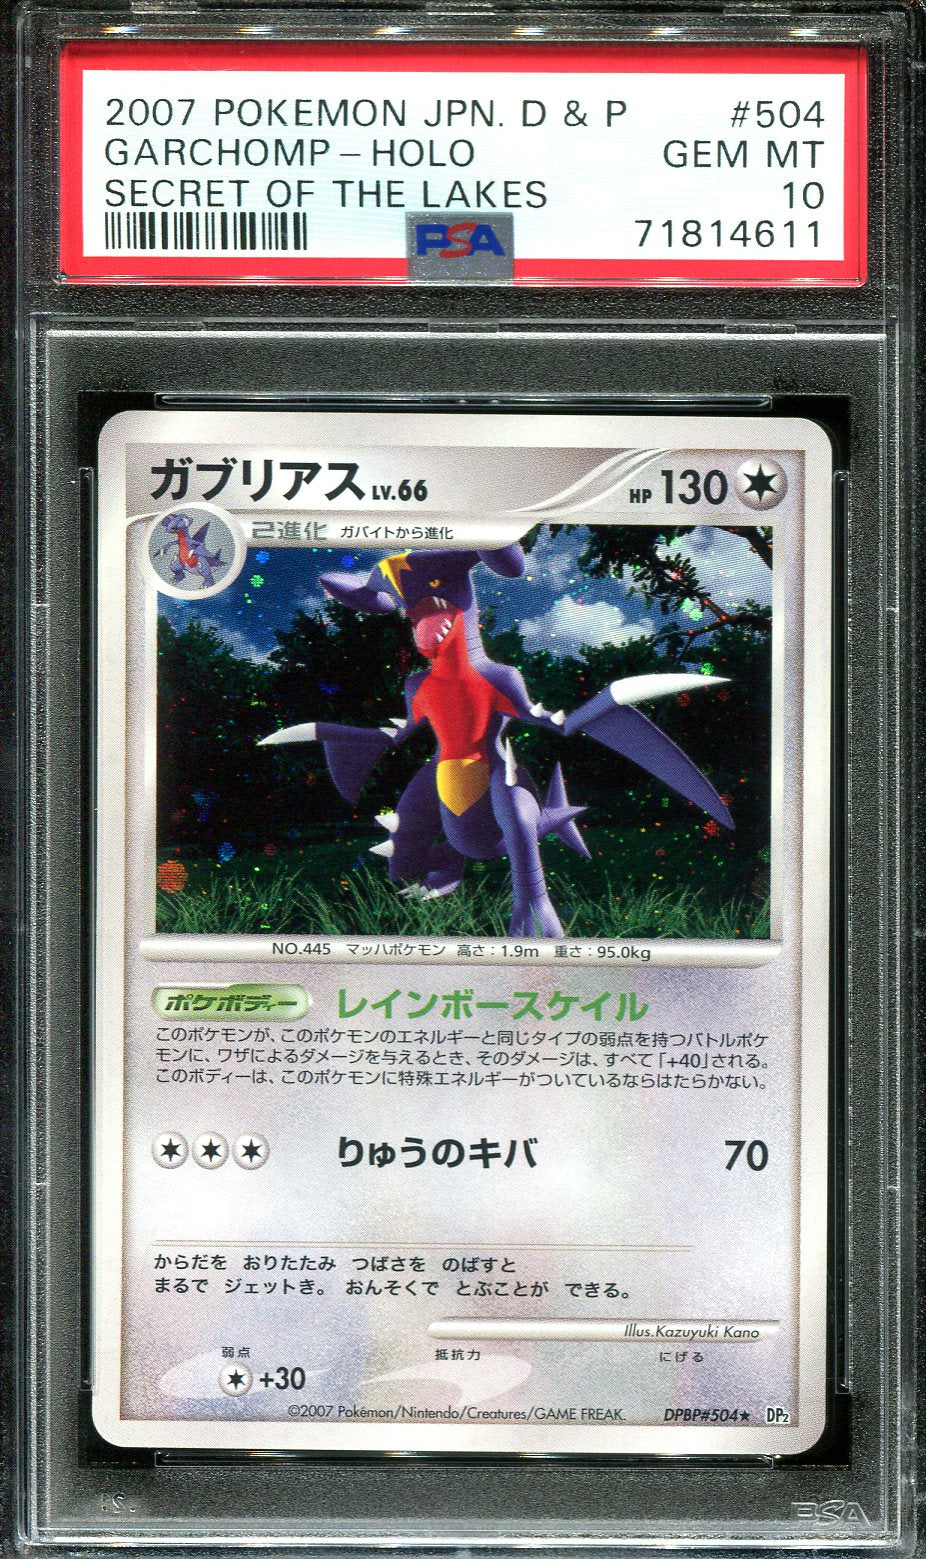 Auction Prices Realized Tcg Cards 2009 Pokemon Japanese Garchomp Half Deck Garchomp  C LV.X-Holo 1ST EDITION